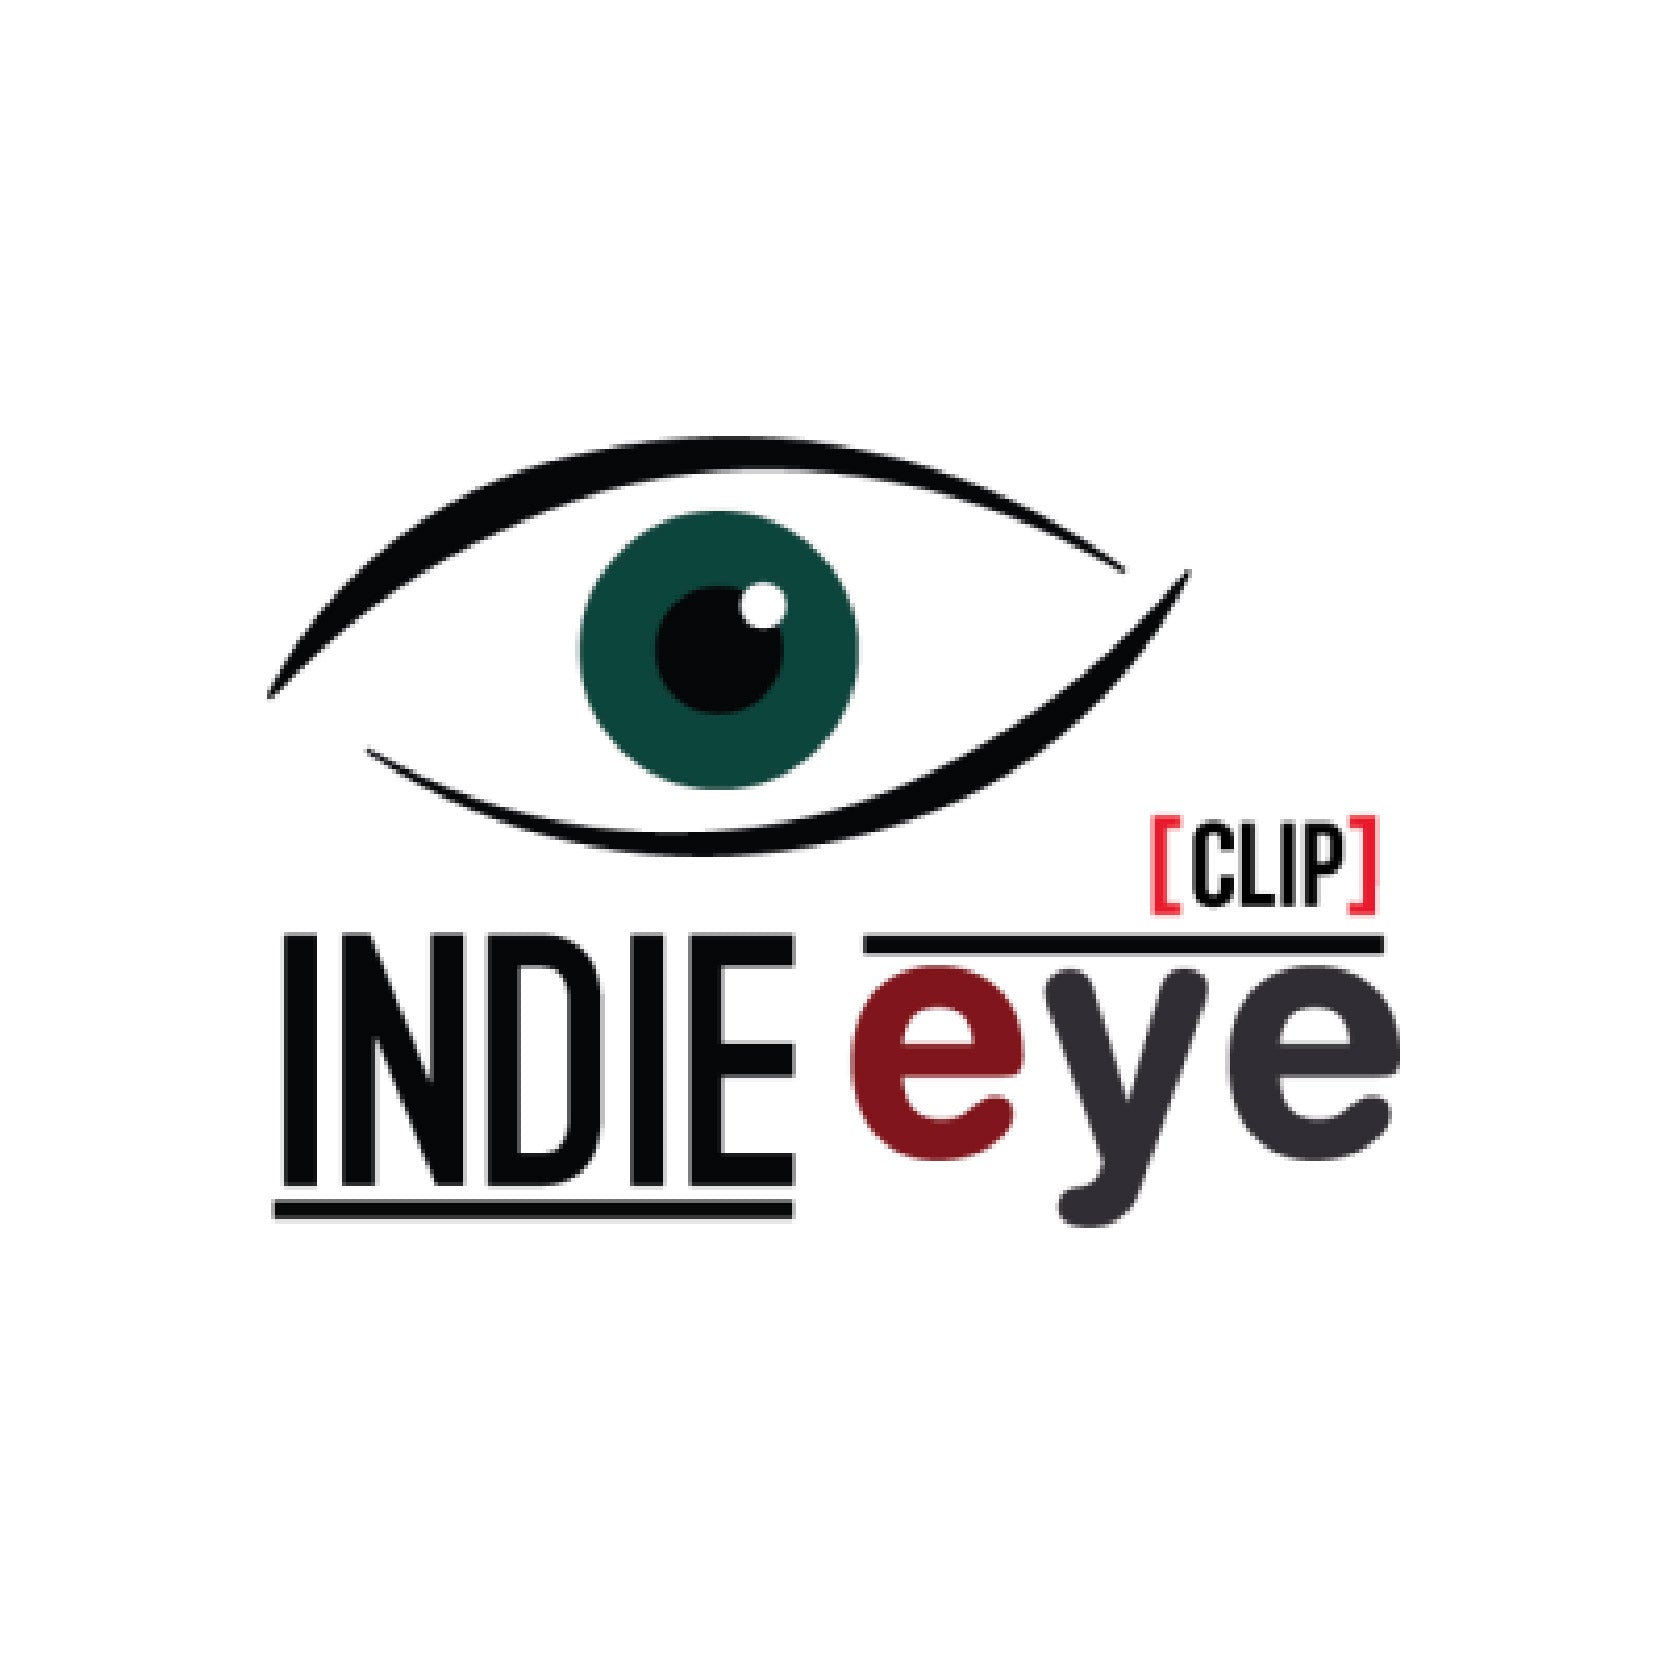 Italian Indie eye HumminGuru